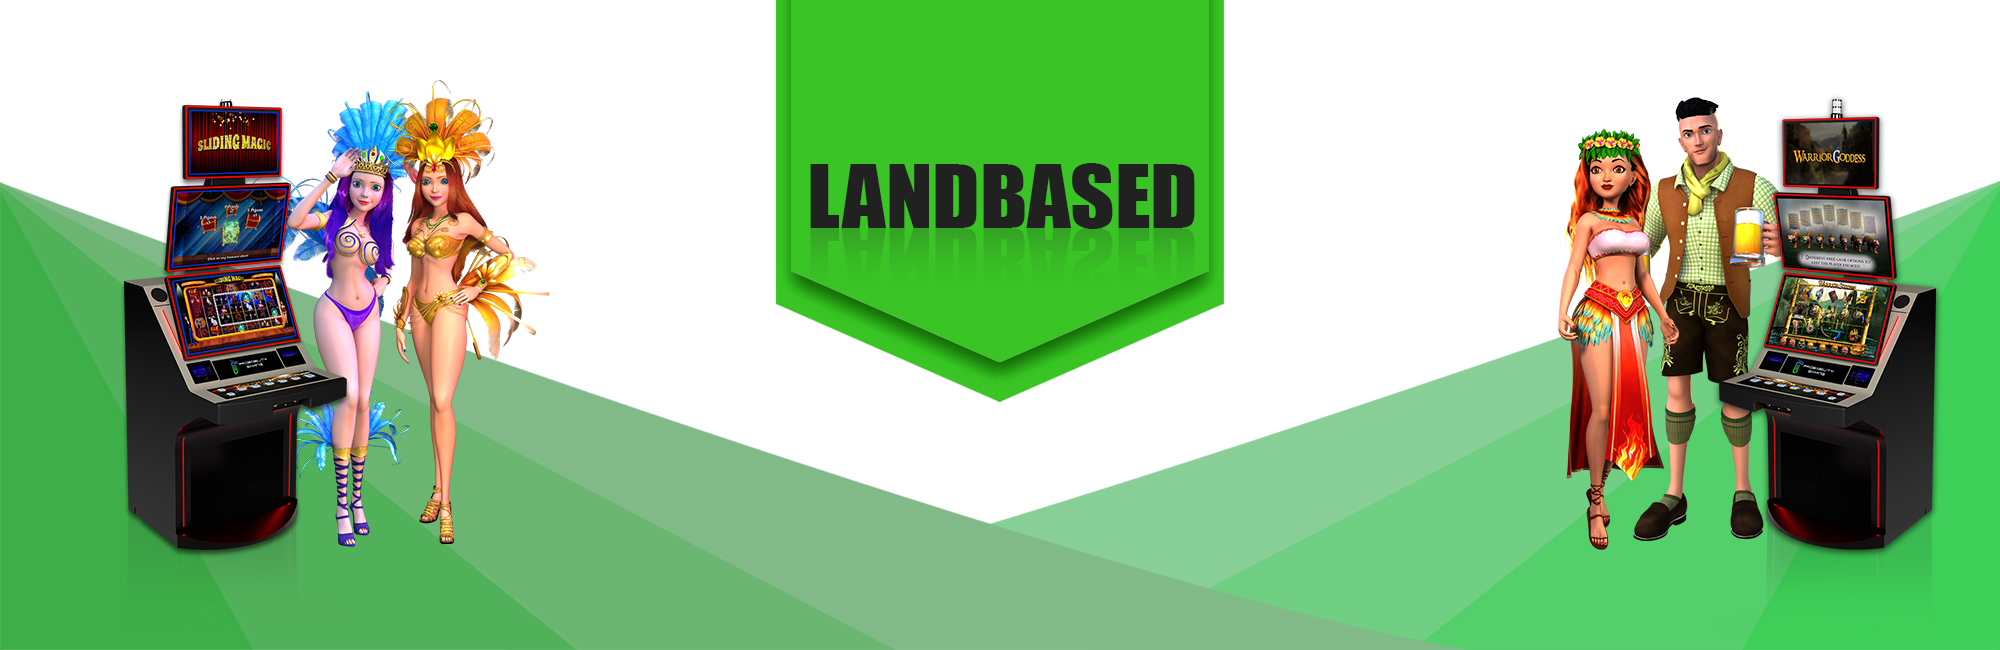 landbased (1)